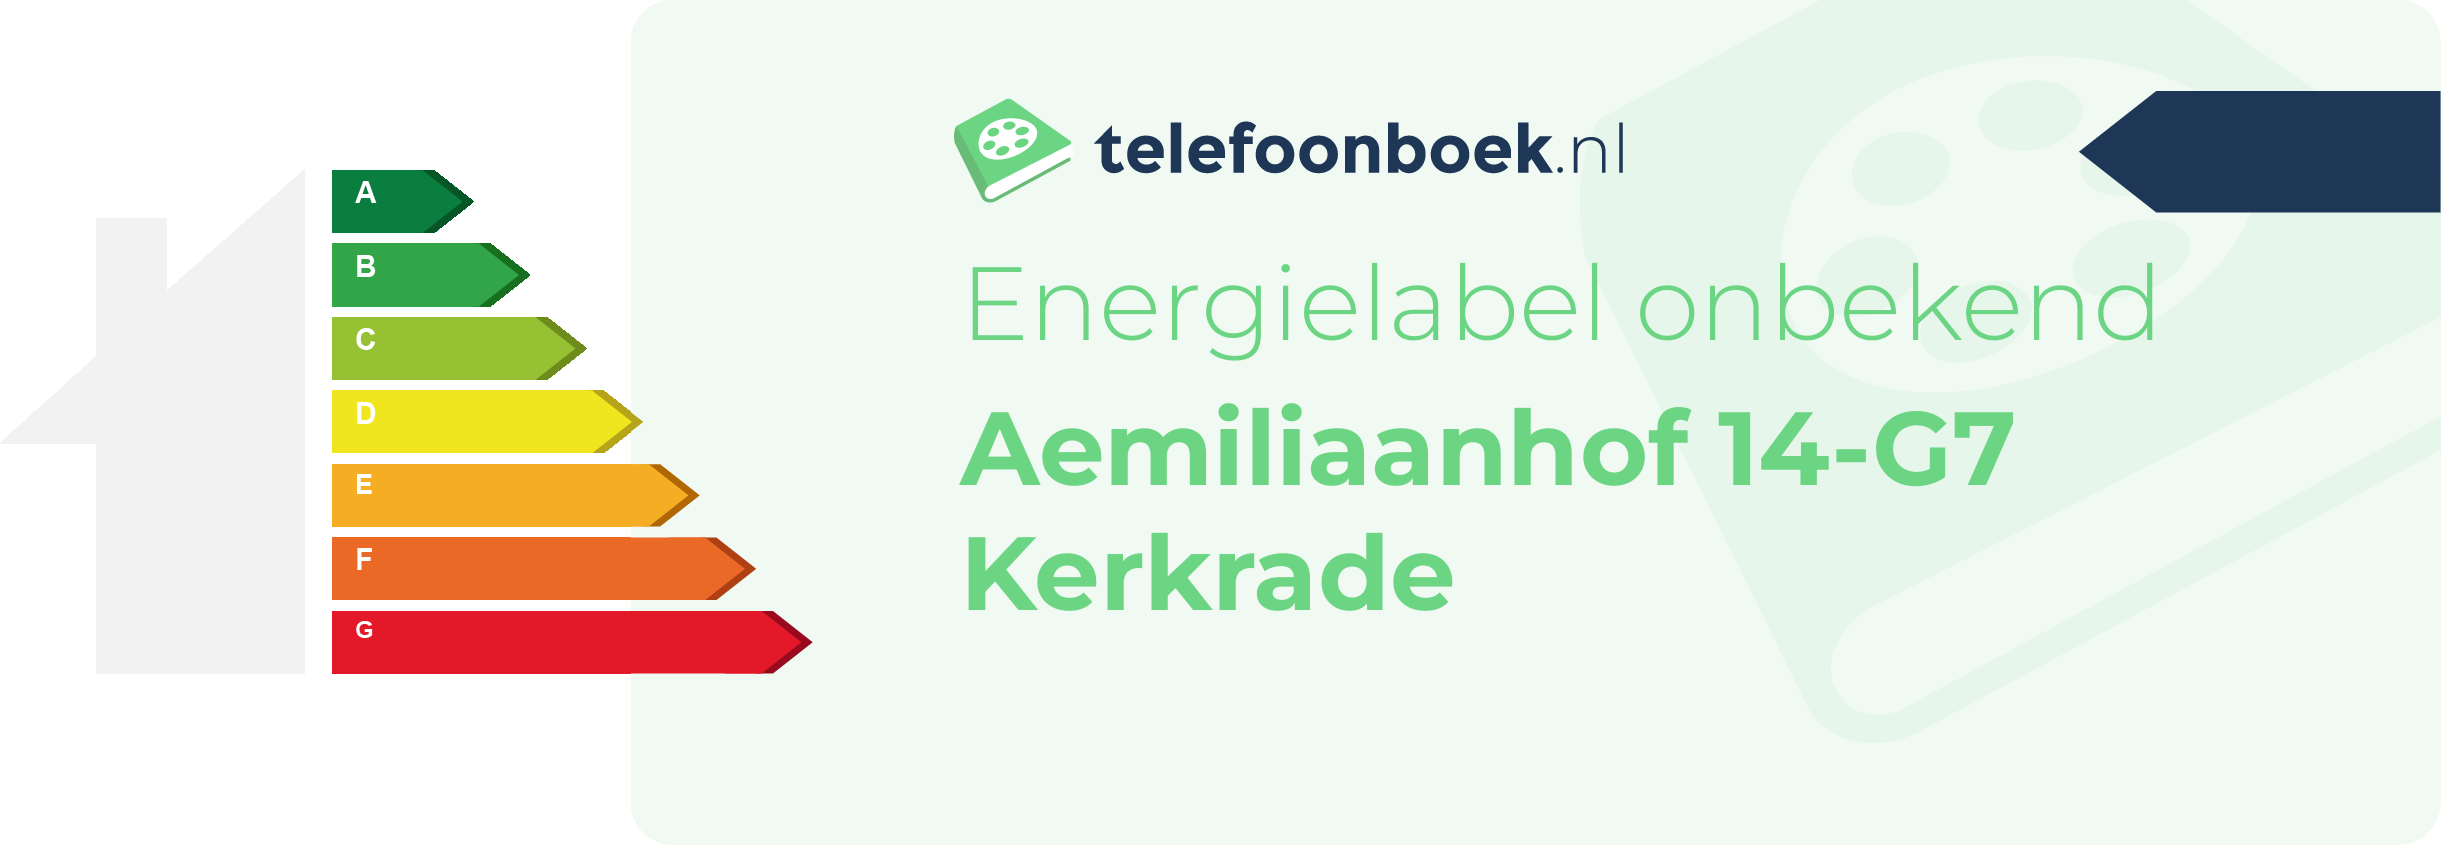 Energielabel Aemiliaanhof 14-G7 Kerkrade